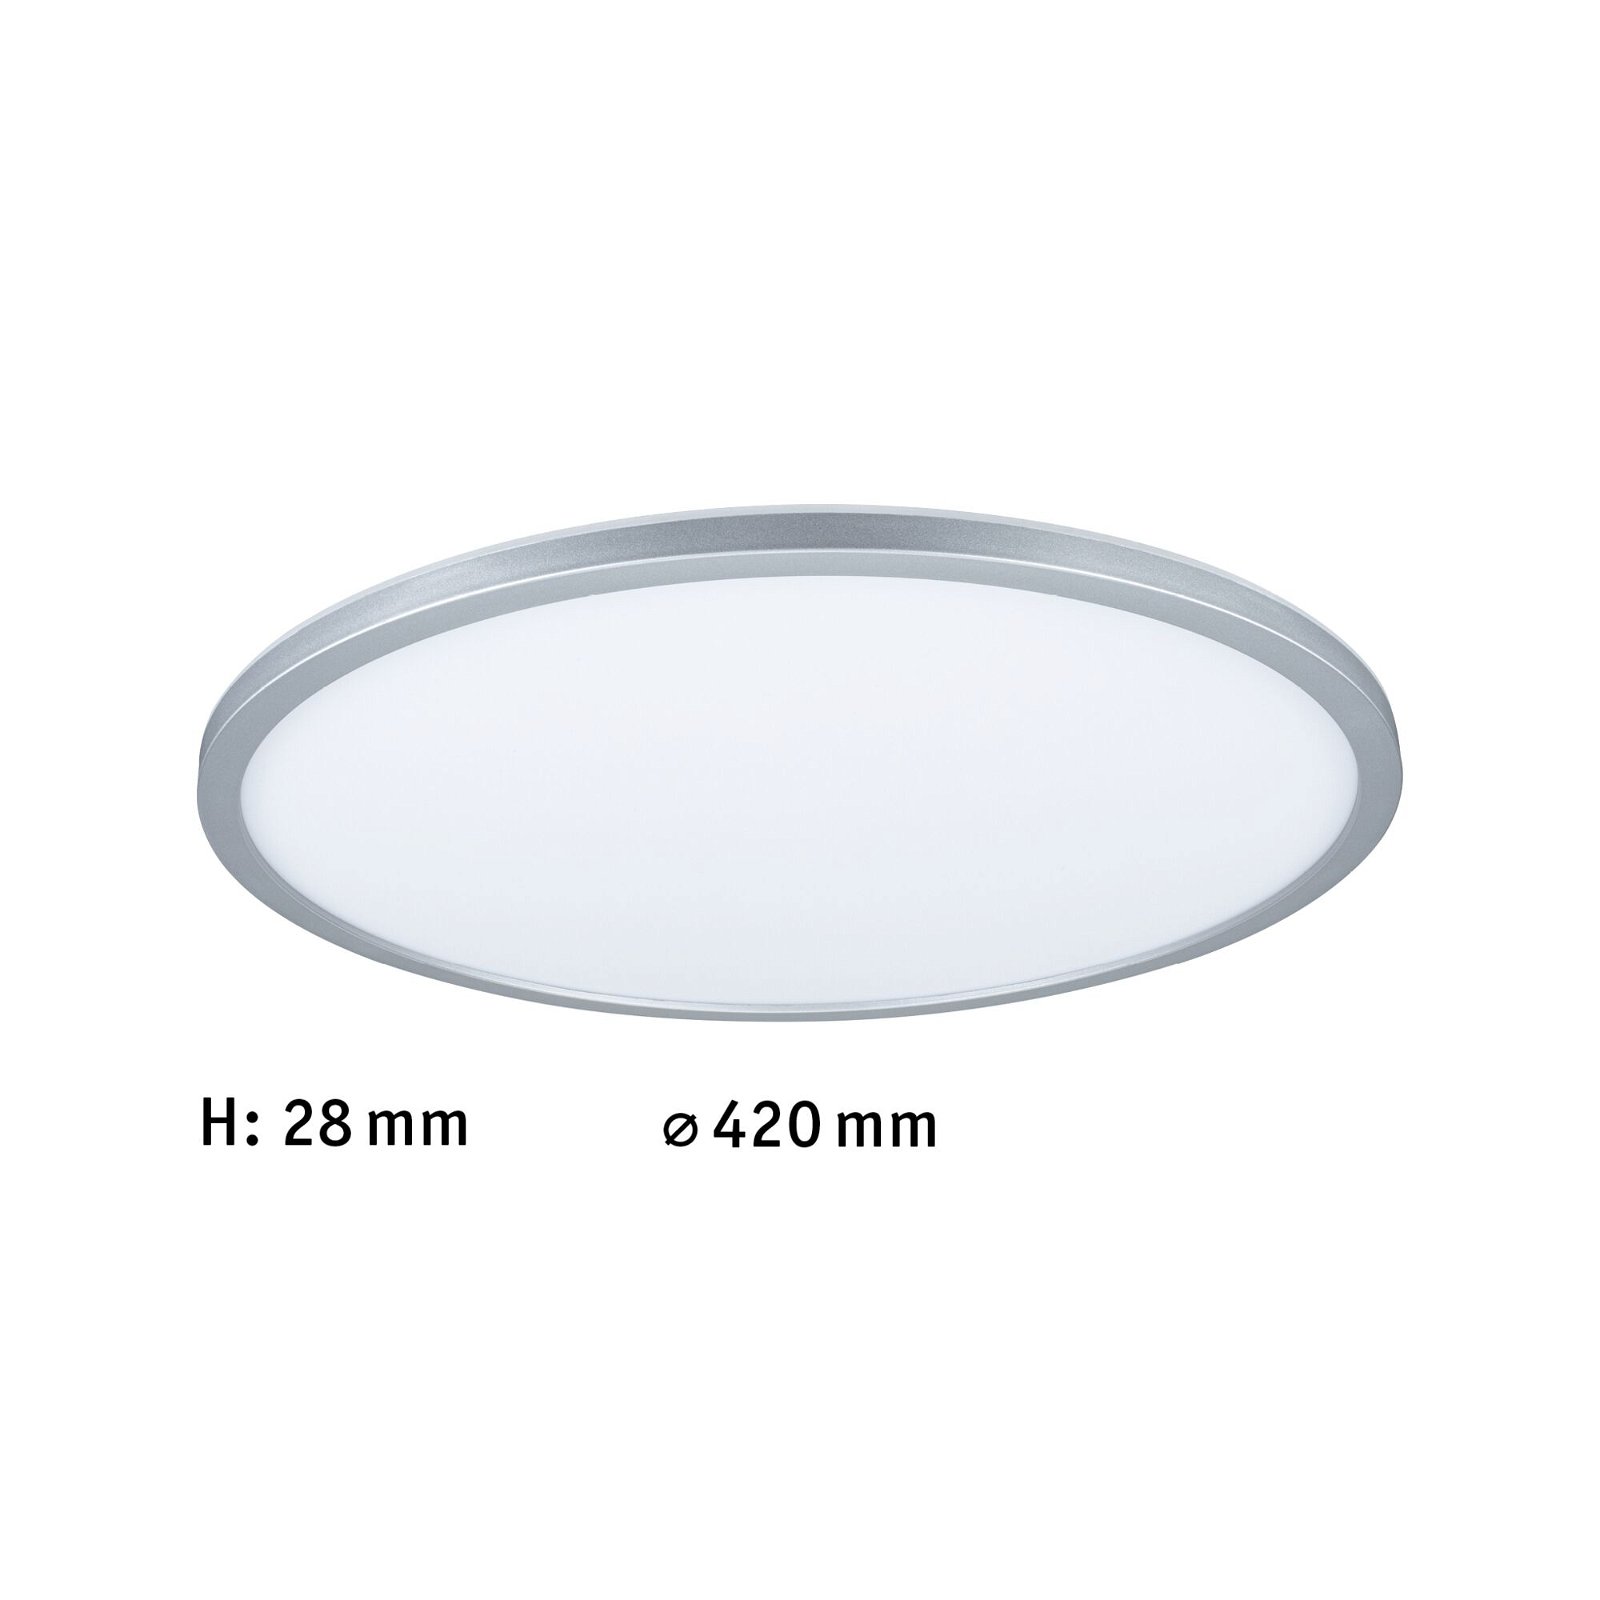 LED Panel 3-Step-Dim Atria Shine Backlight round 420mm 22W 2300lm 4000K Chrome matt dimmable